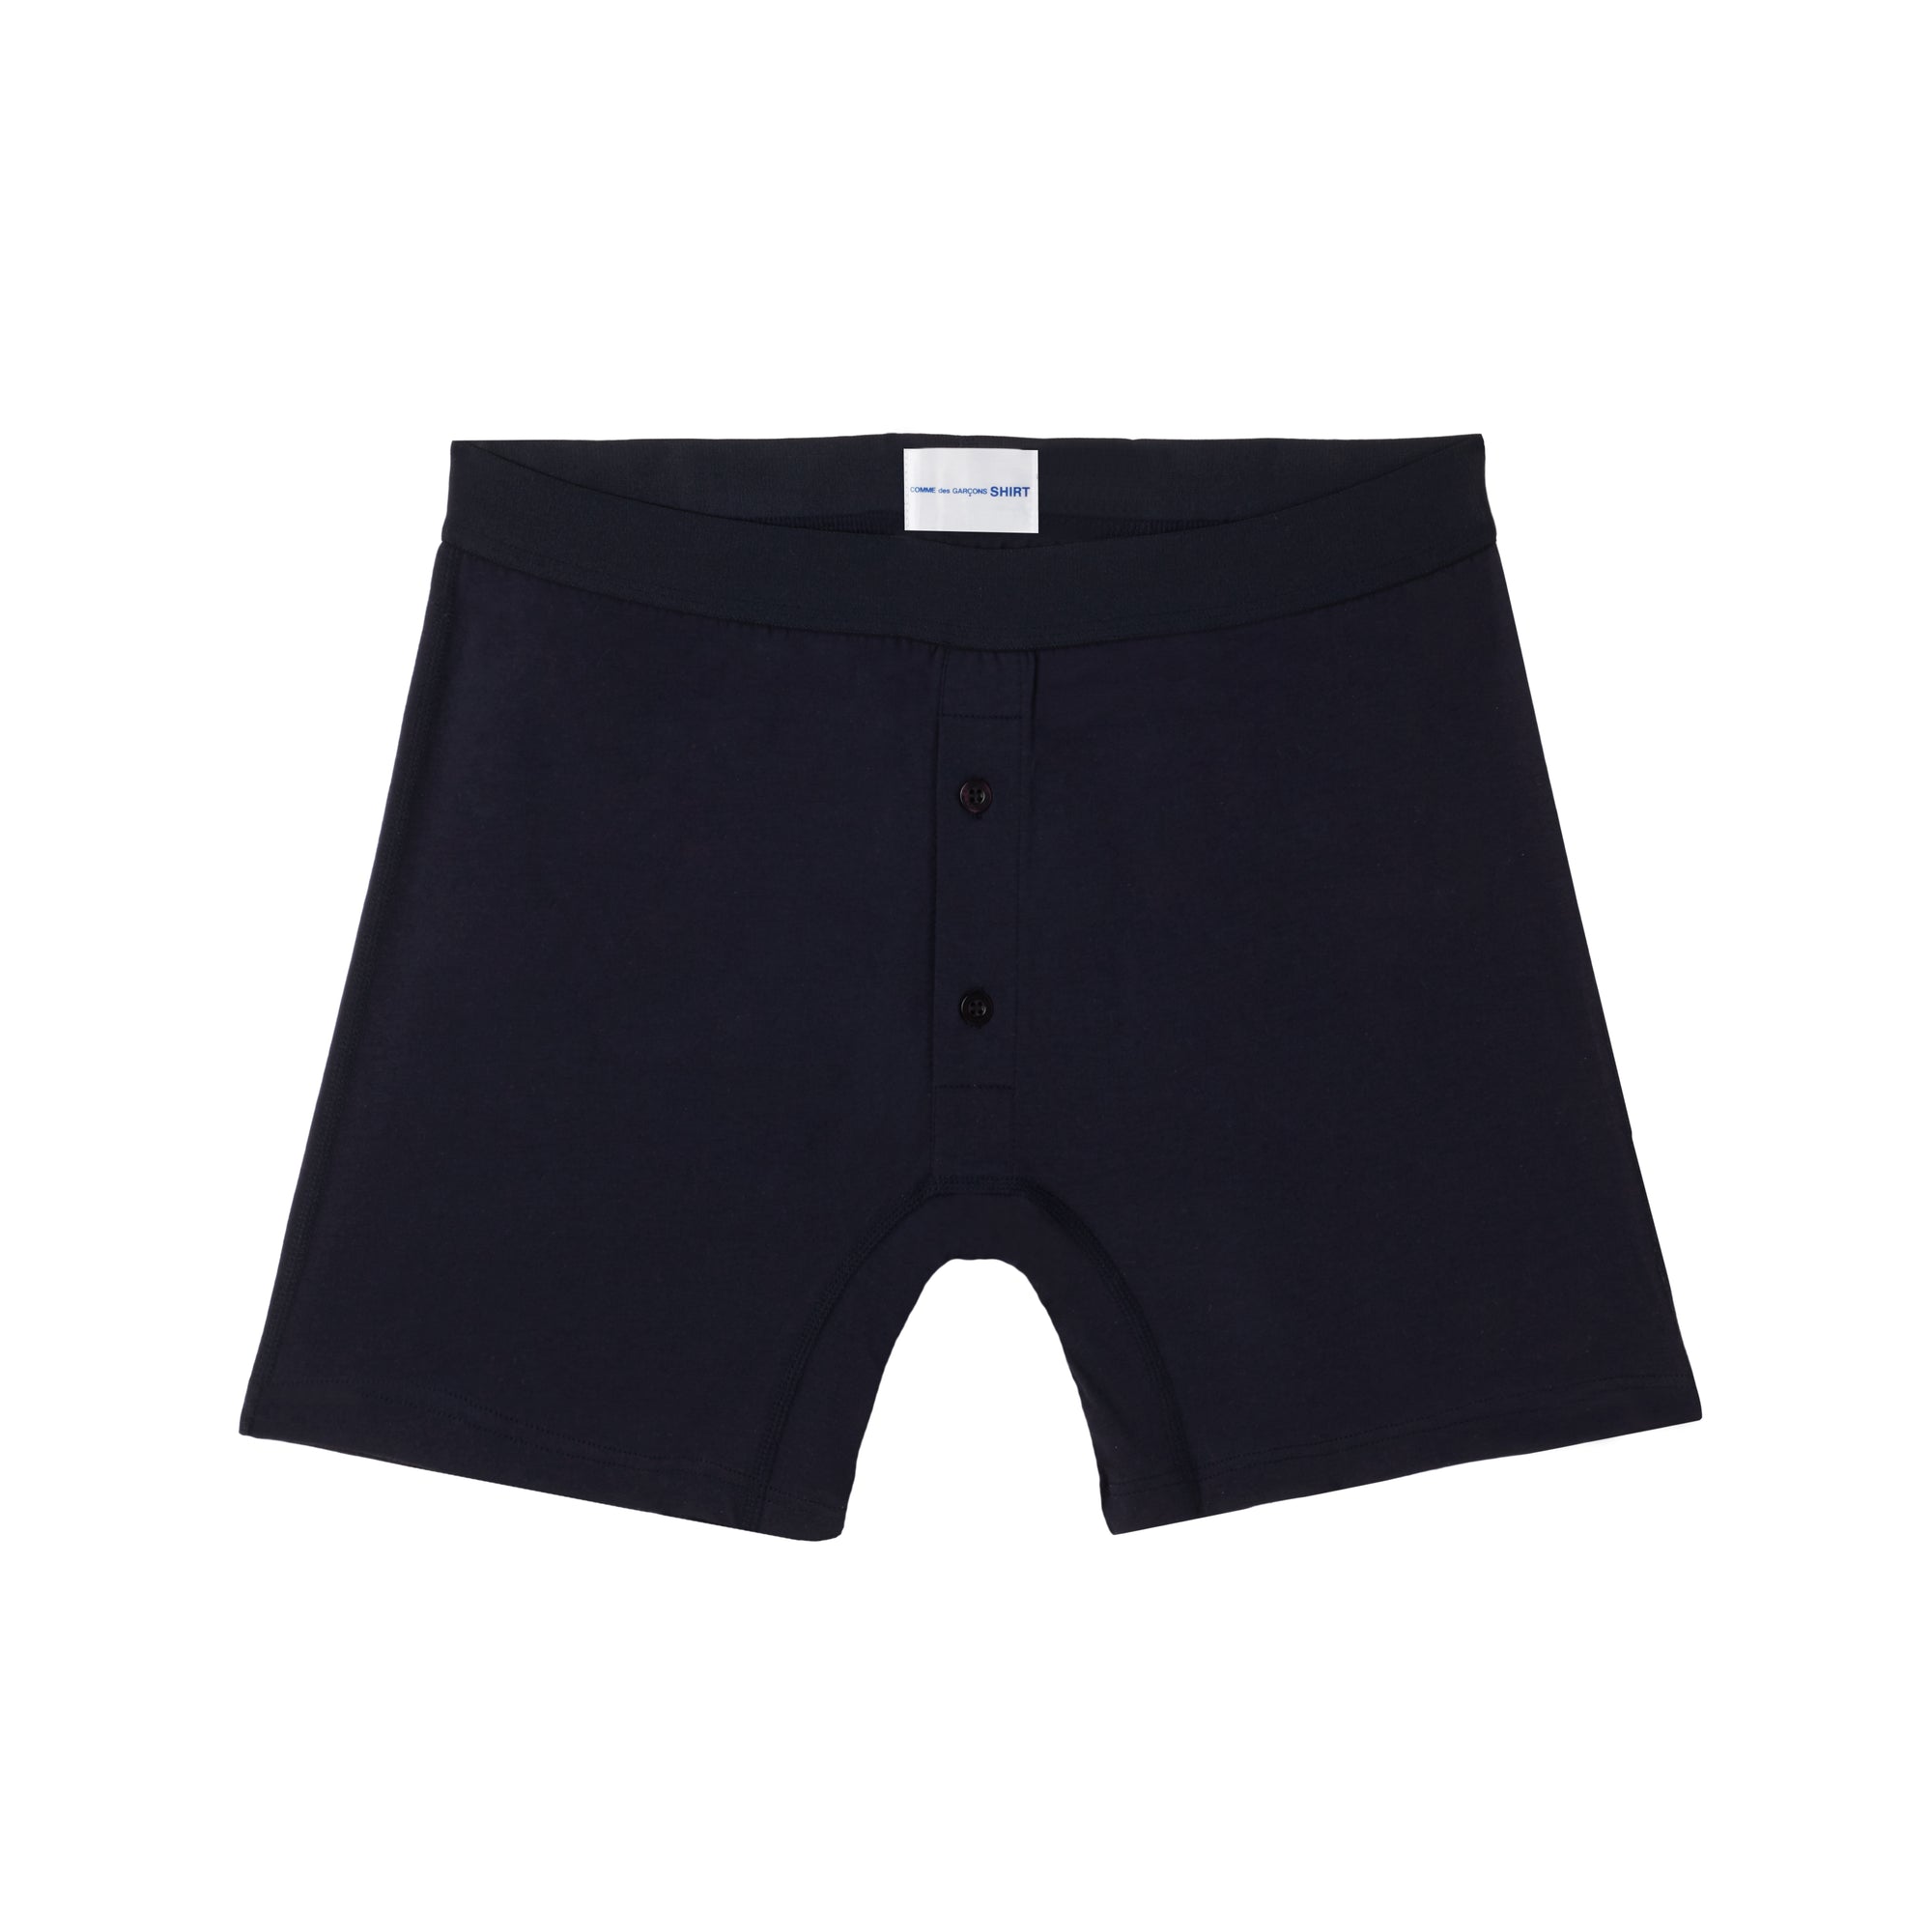 CDG SHIRT Underwear - Sunspel Two Button Boxer - (Navy) view 1